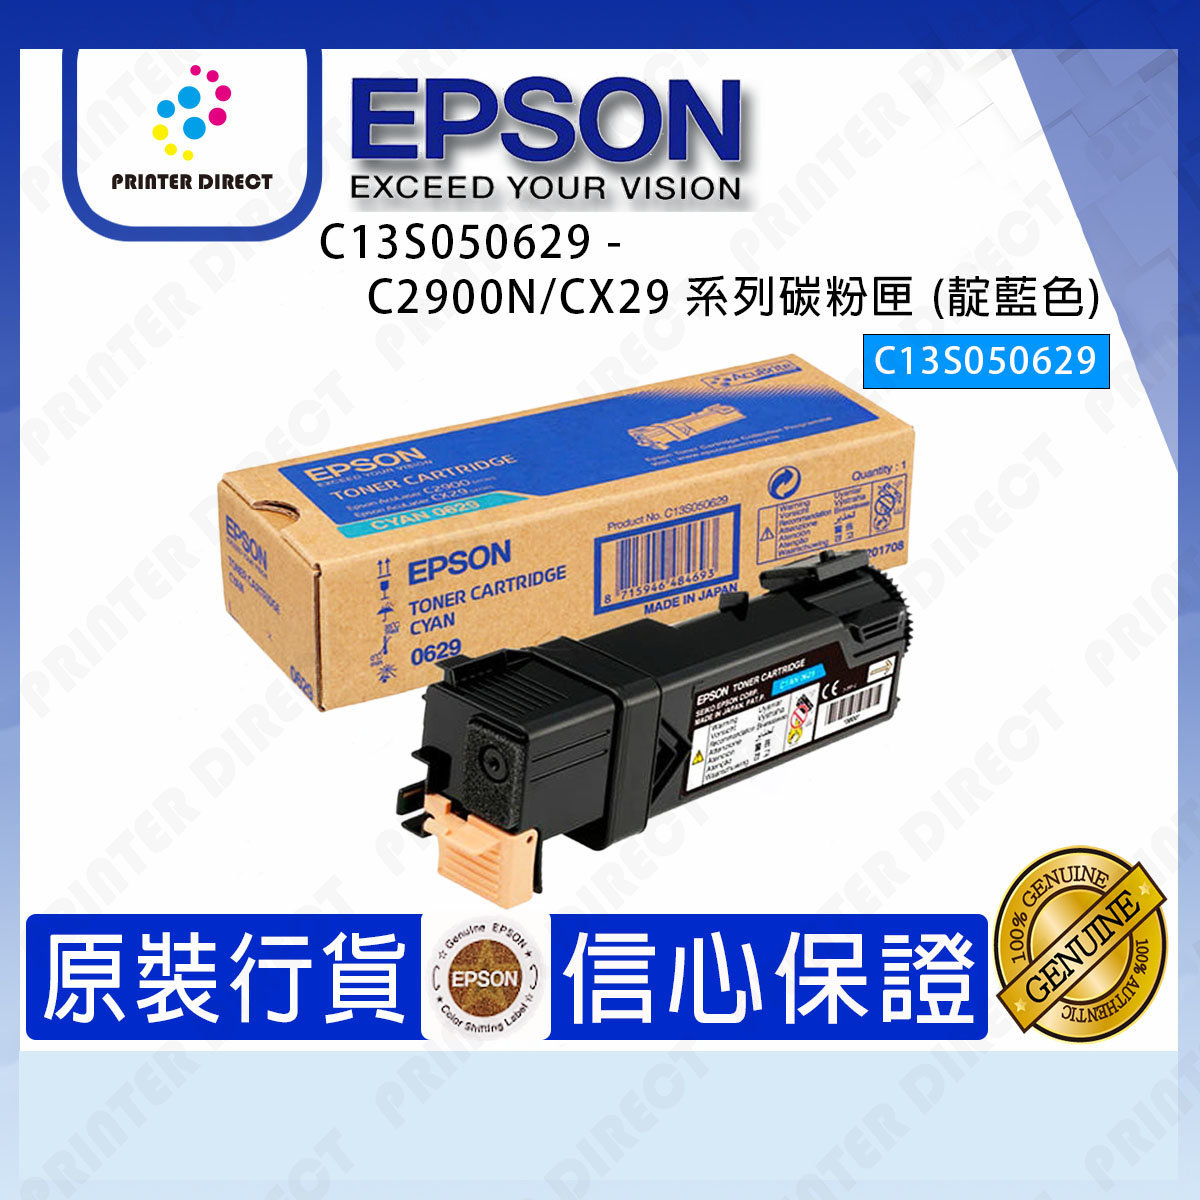 C13S050629 - C2900N/CX29 Series Toner Cartridge (Cyan)